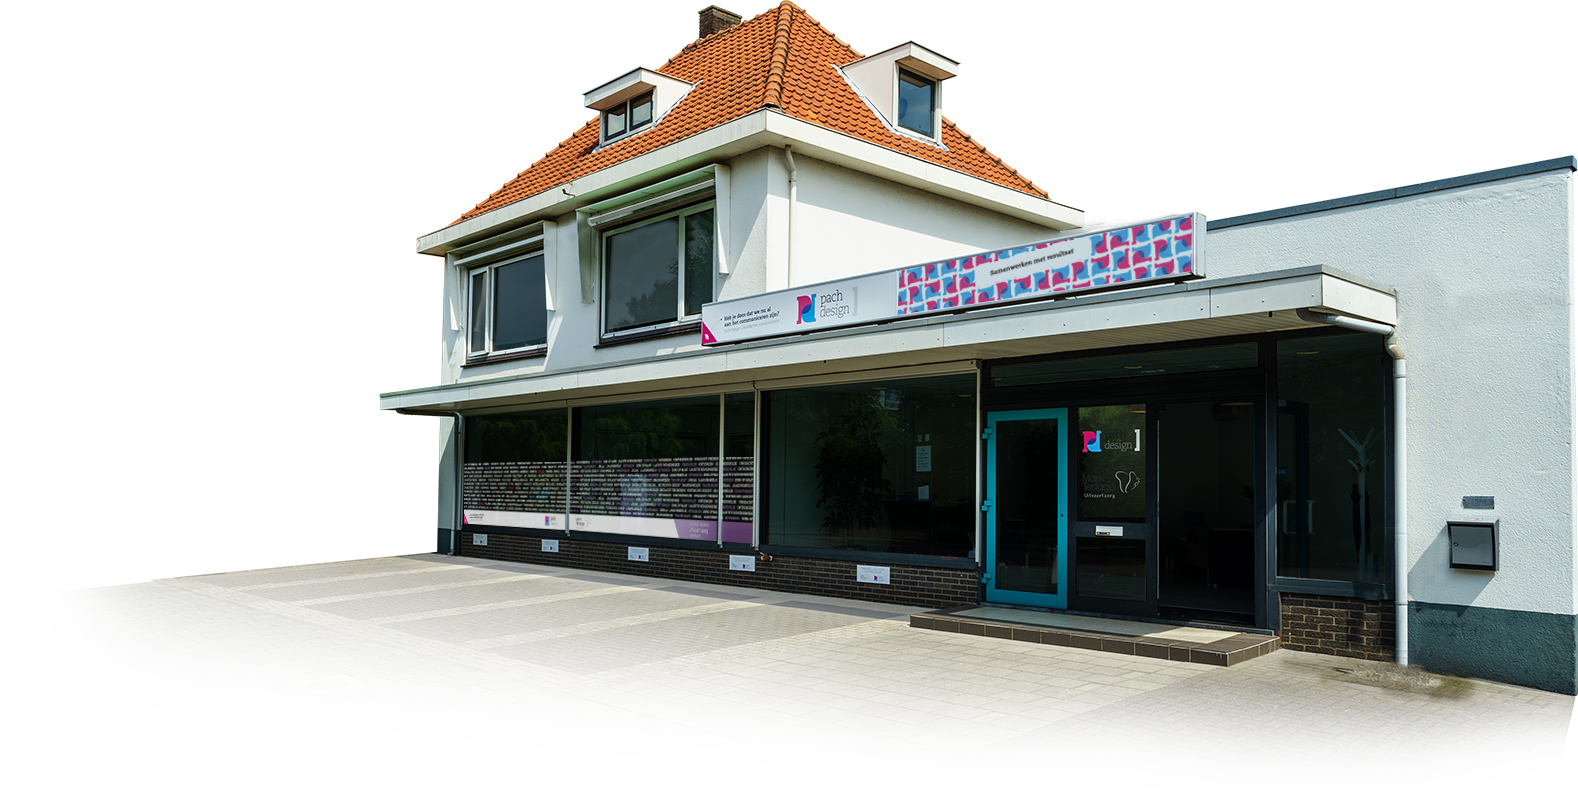 Pach Design communicatiebureau. Pand aan de Parallelweg 30 in Veenendaal